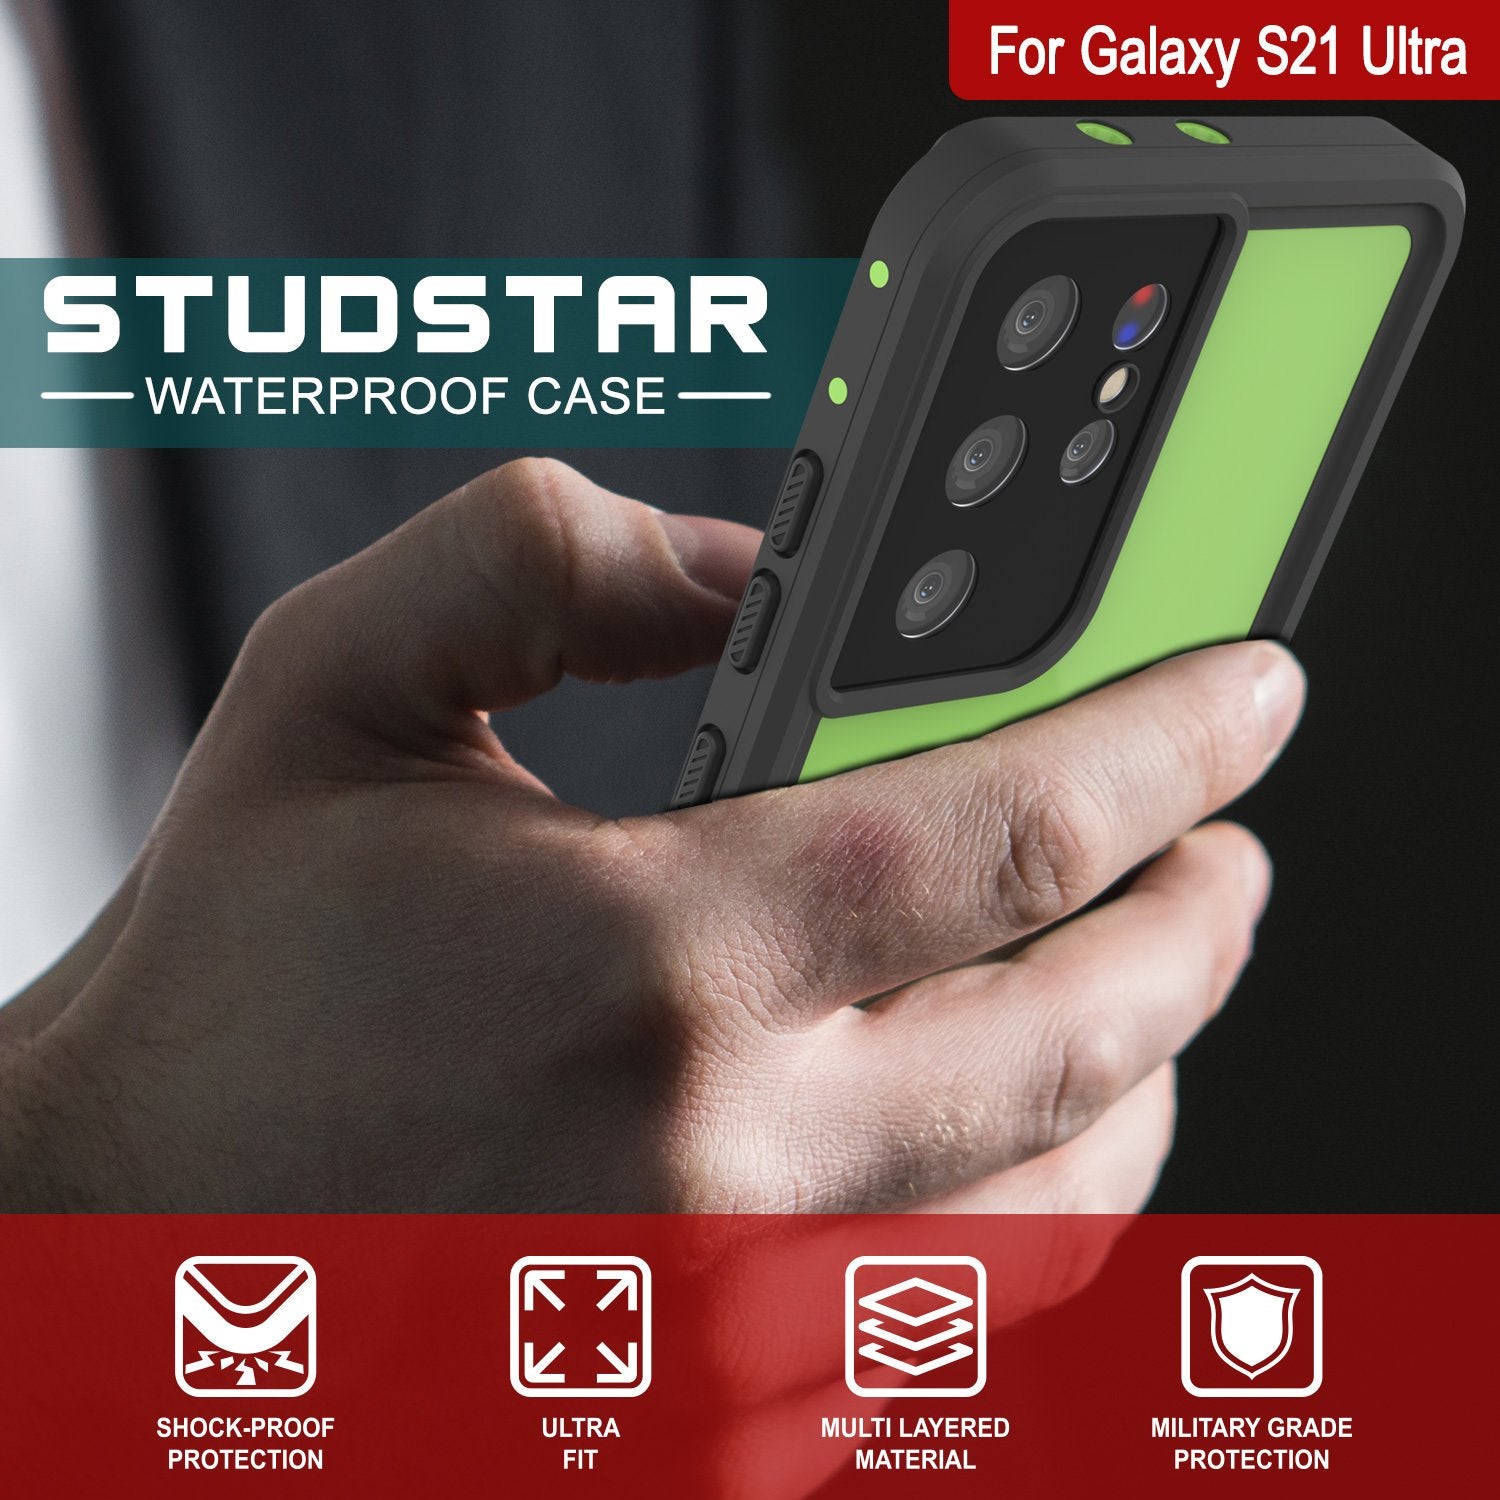 Galaxy S21 Ultra Waterproof Case PunkCase StudStar Light Green Thin 6.6ft Underwater IP68 ShockProof